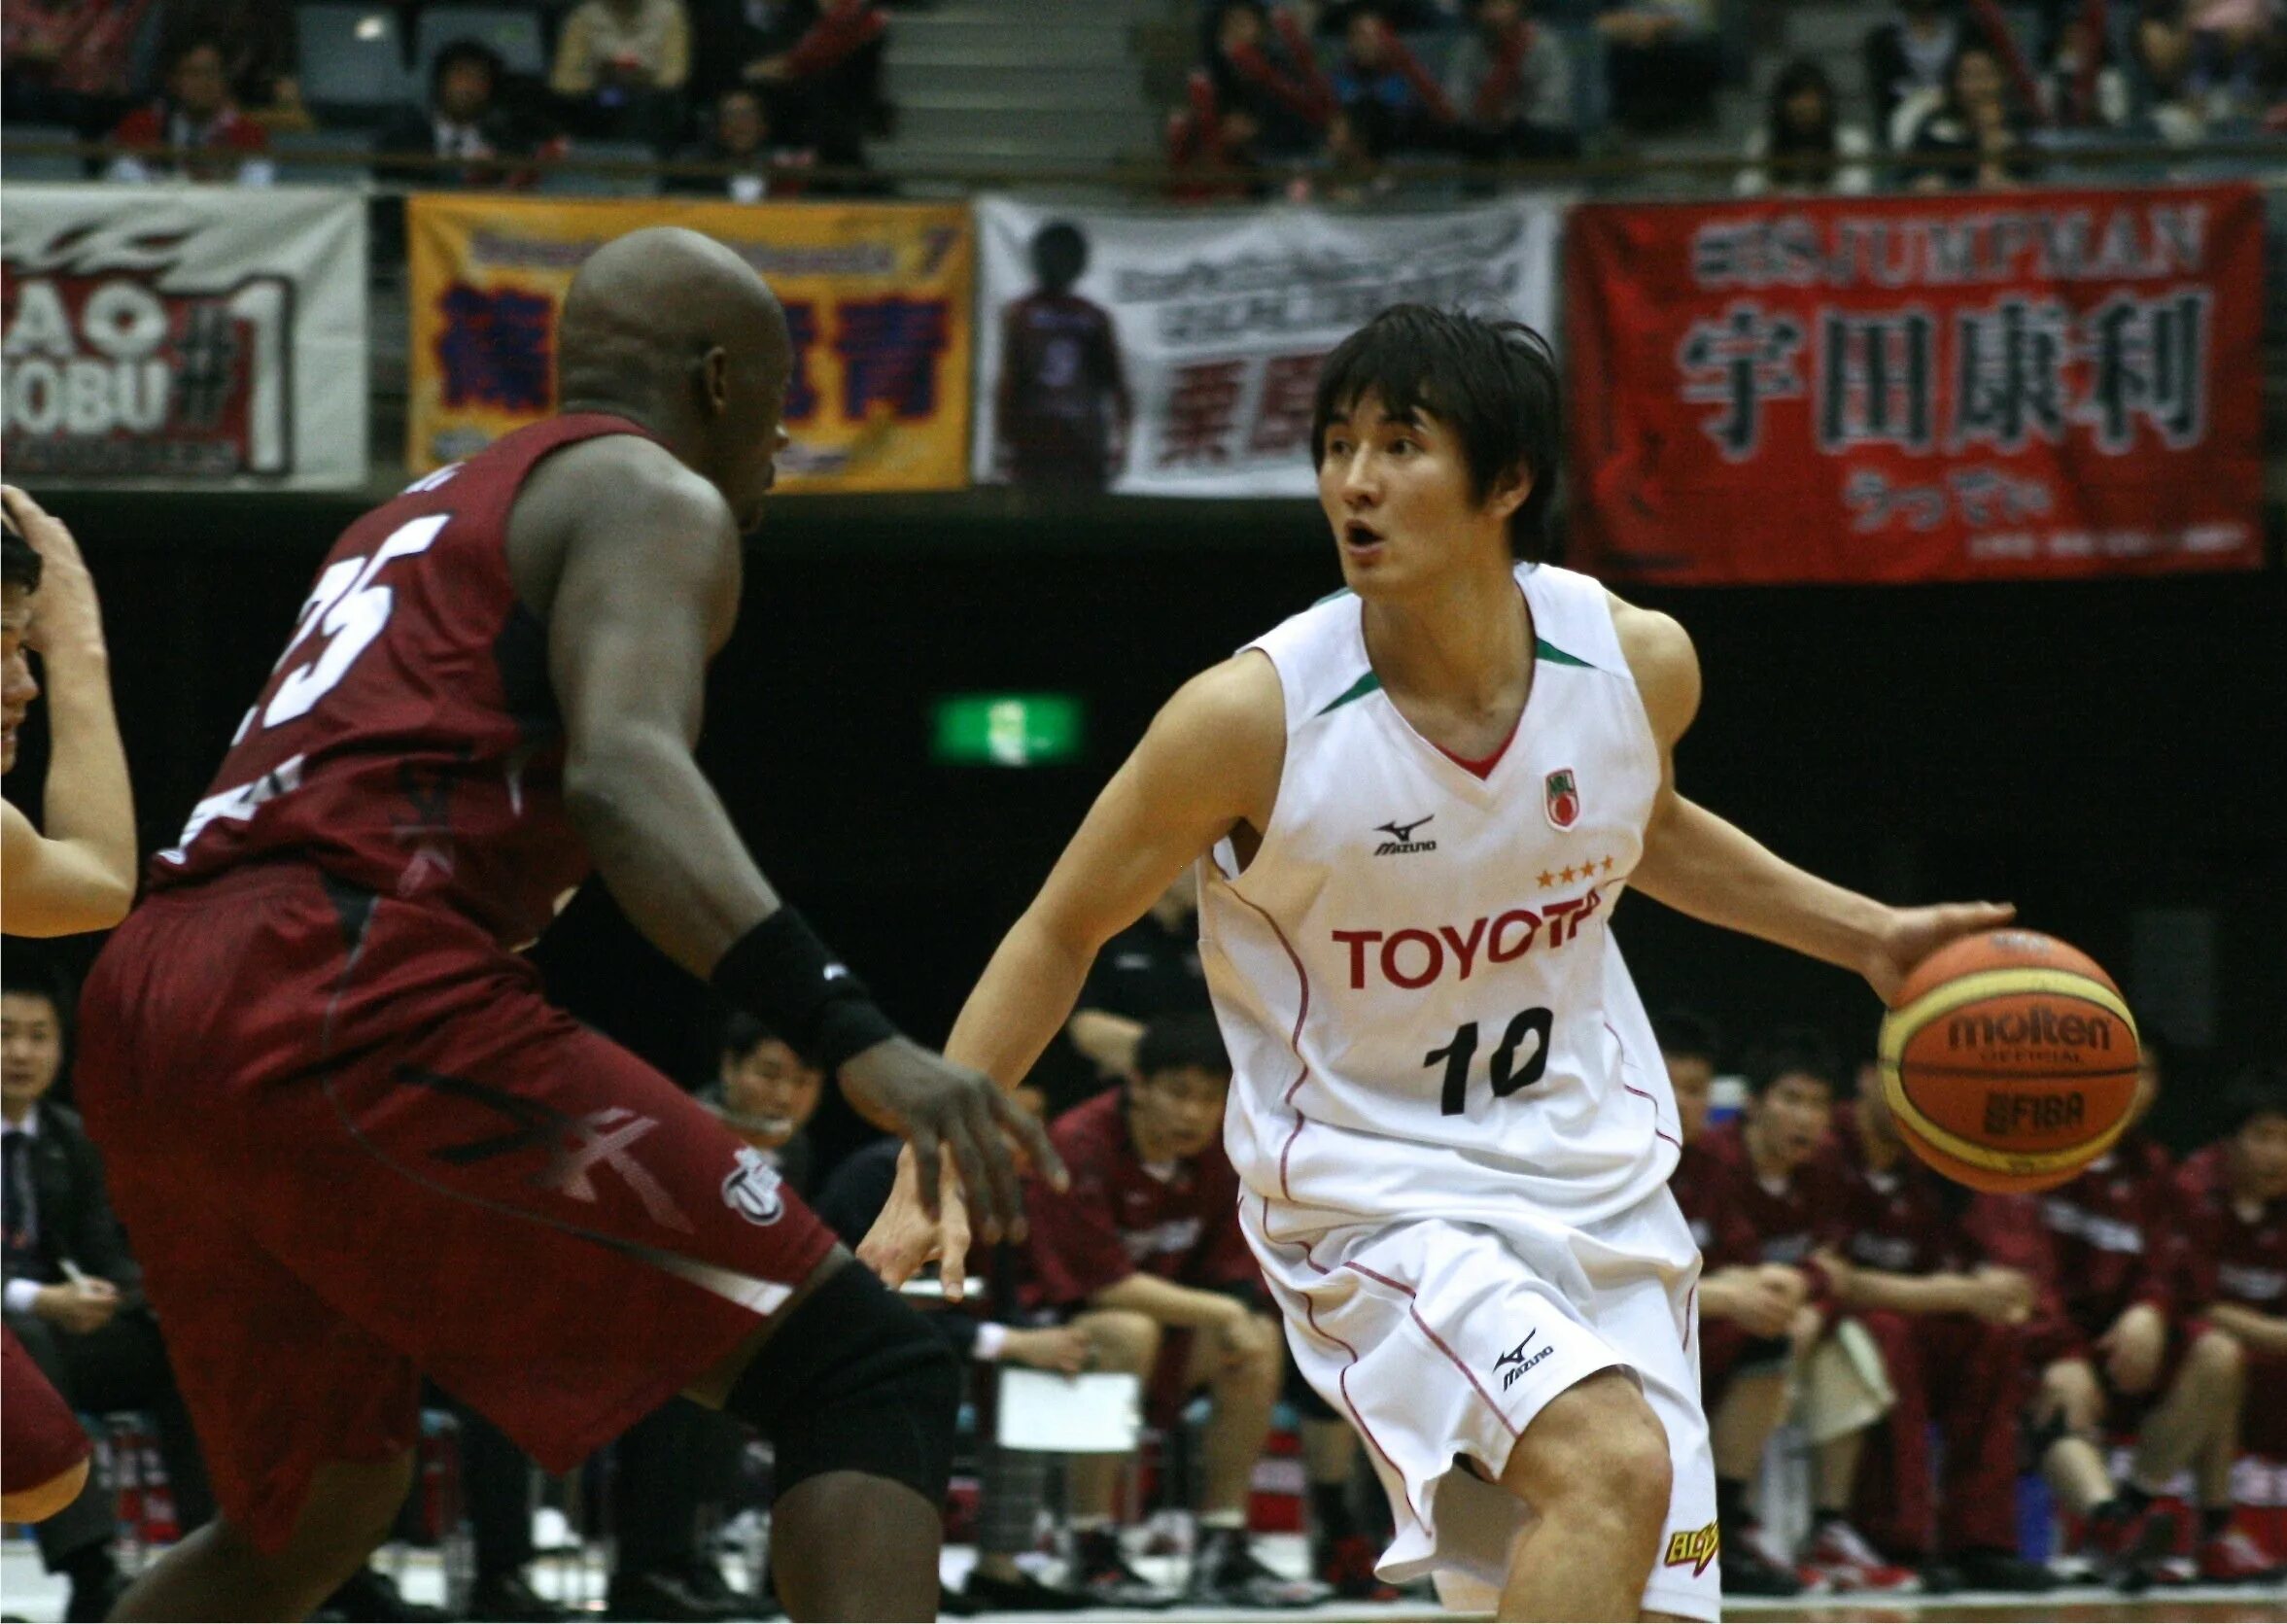 Джитсу баскетбол. Баскетбольная команда Японии. Баскетболисты Японии. Японские баскетболистки. Японцы в баскетболе.